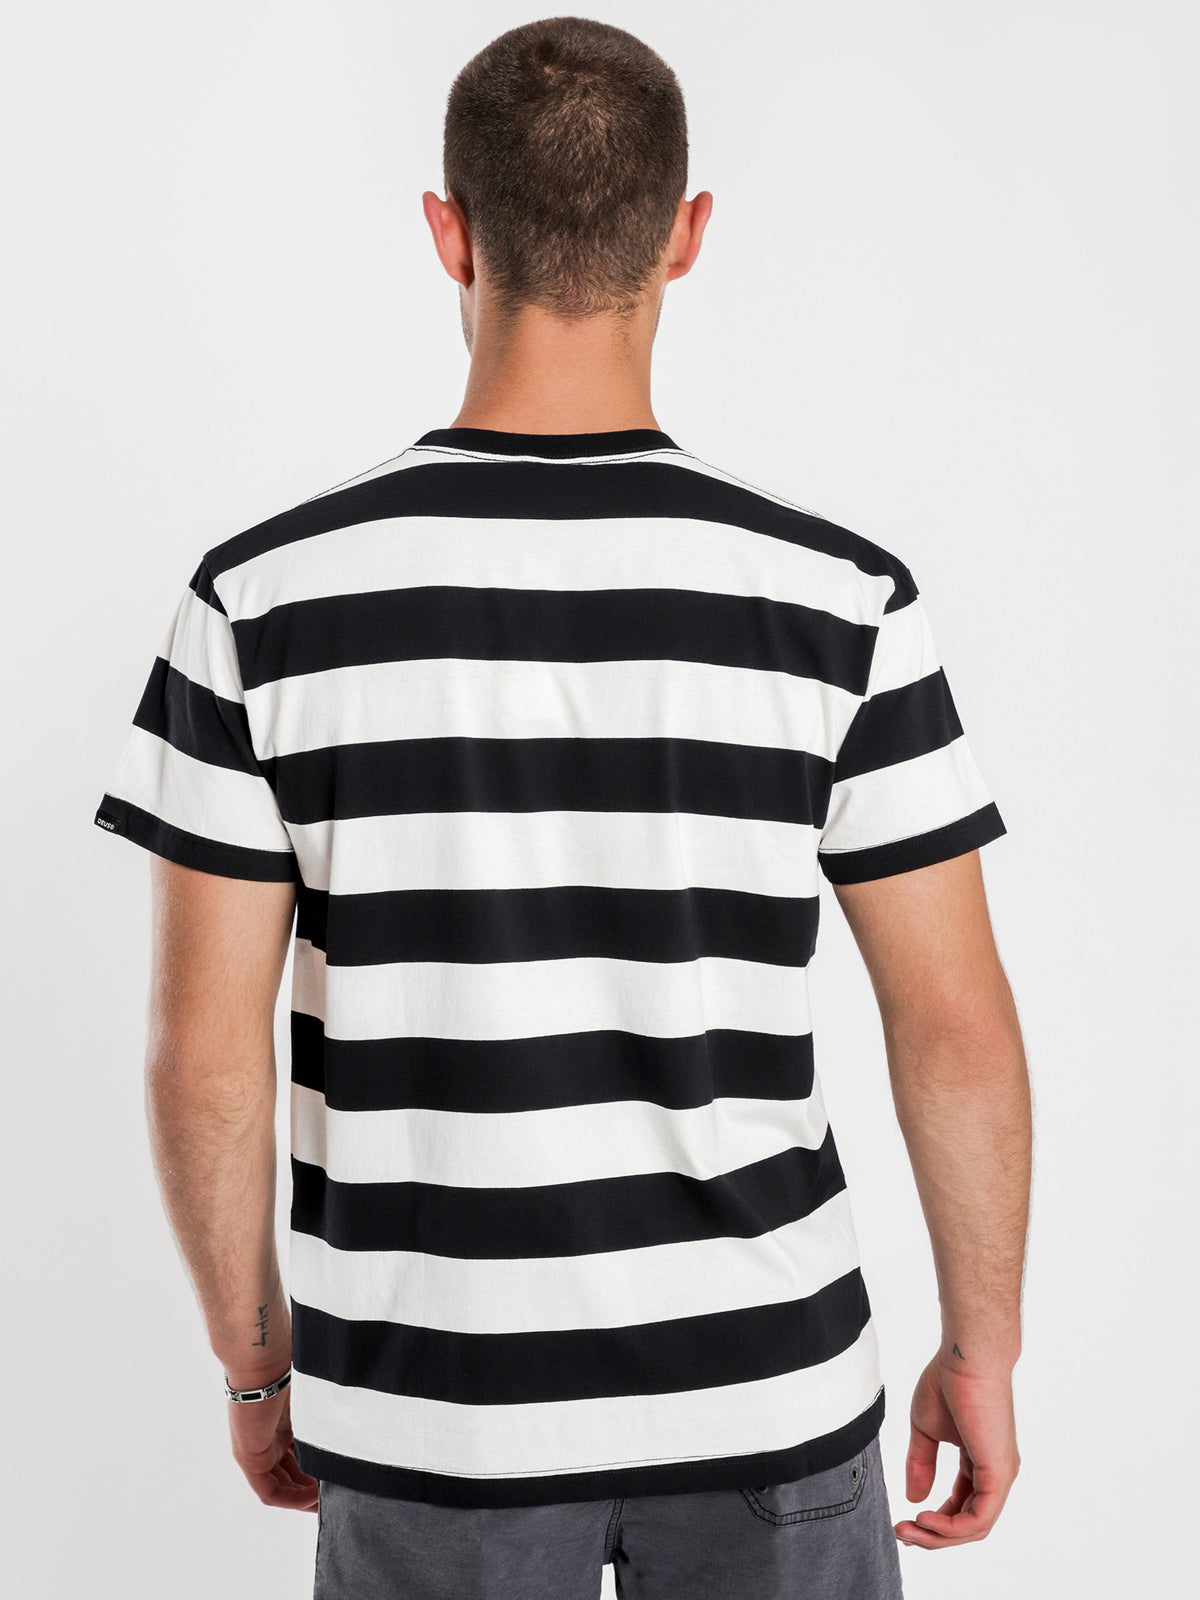 Amore Stripe Short Sleeve T-Shirt in Black